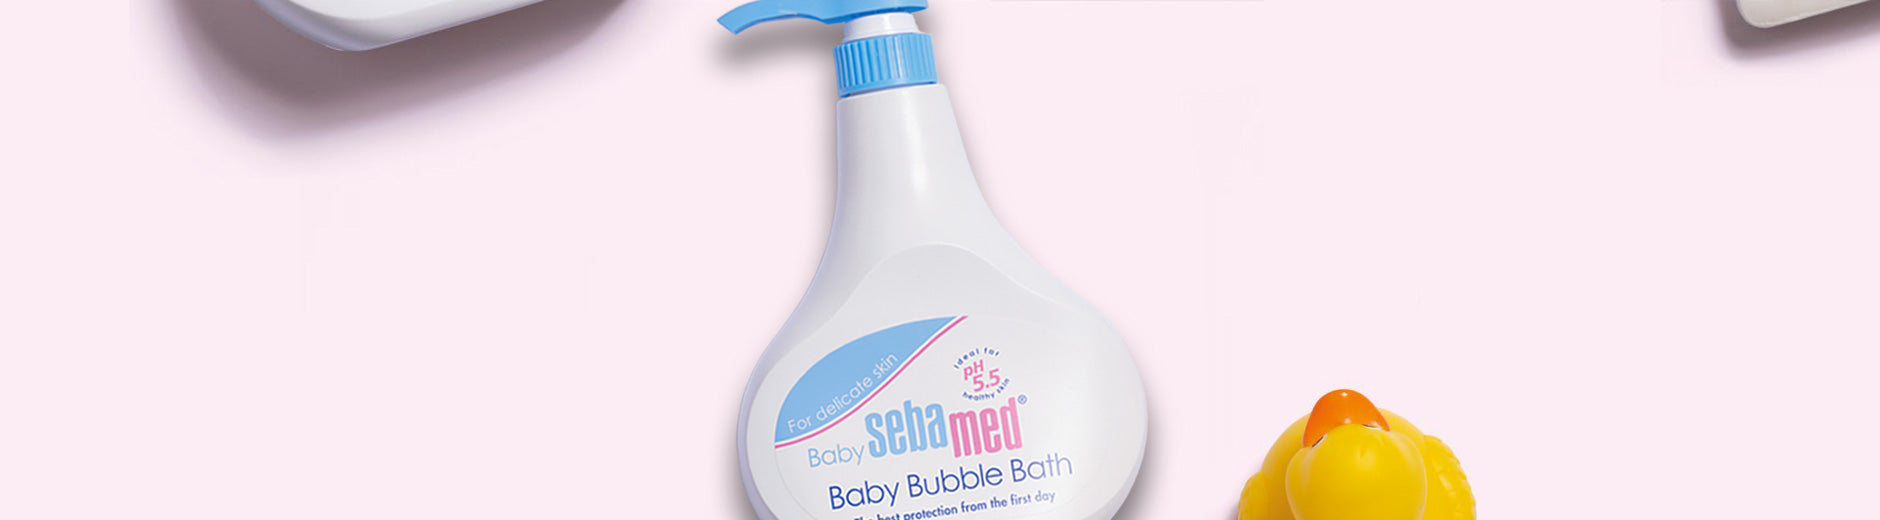 sebamed baby bubble bath pump bottle with rubber duck